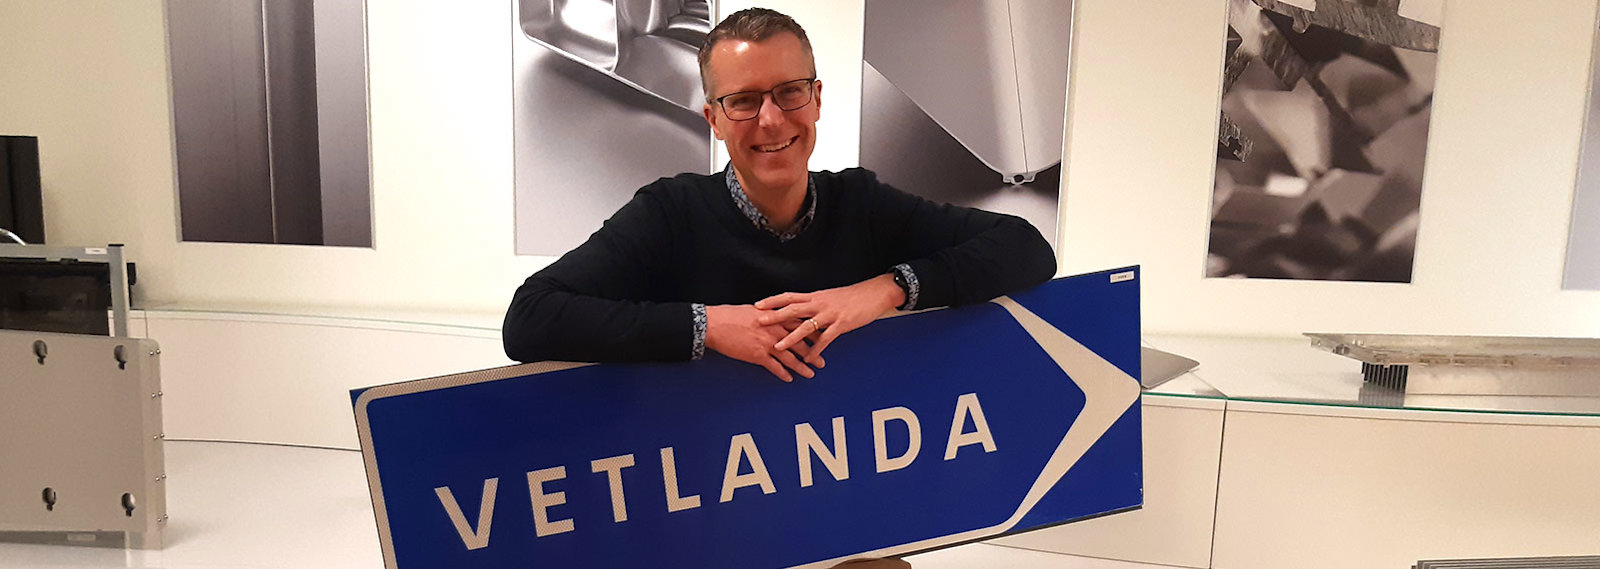 Hans Fredriksson is posing with a Vetlanda sign